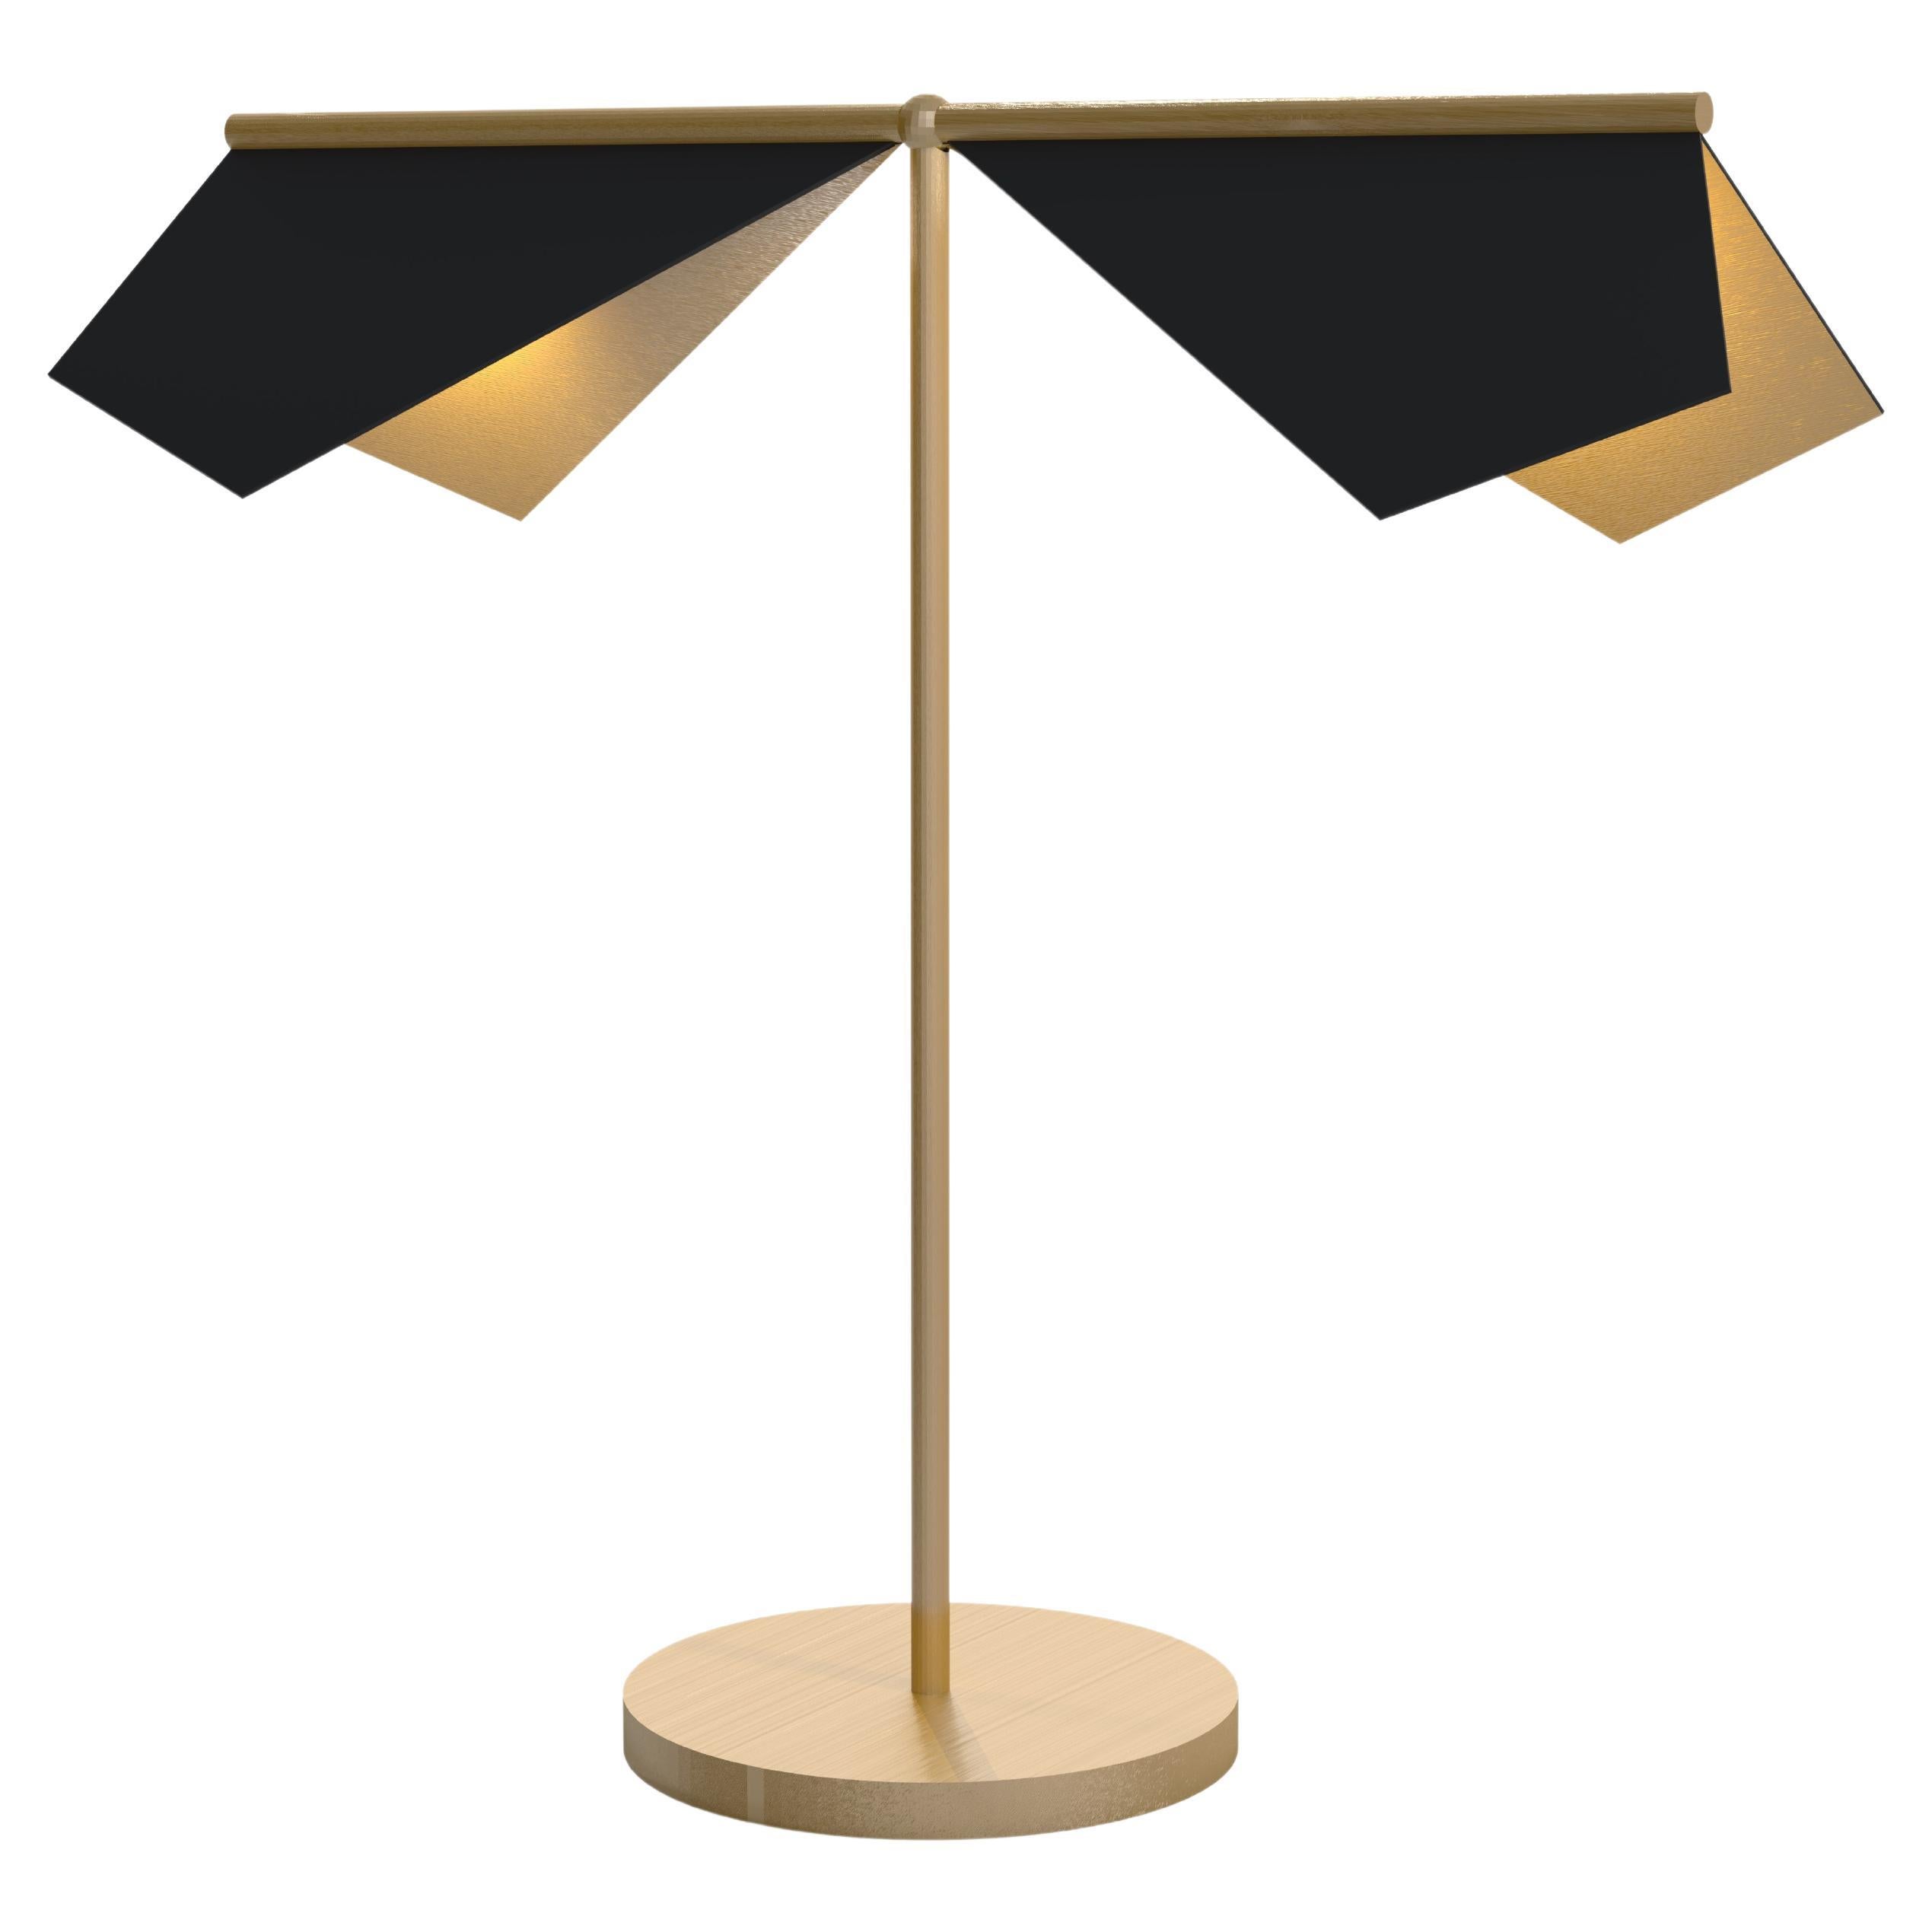 Imagin Vespertilio Table Lamp 2 in Matt Black and Brushed Brass